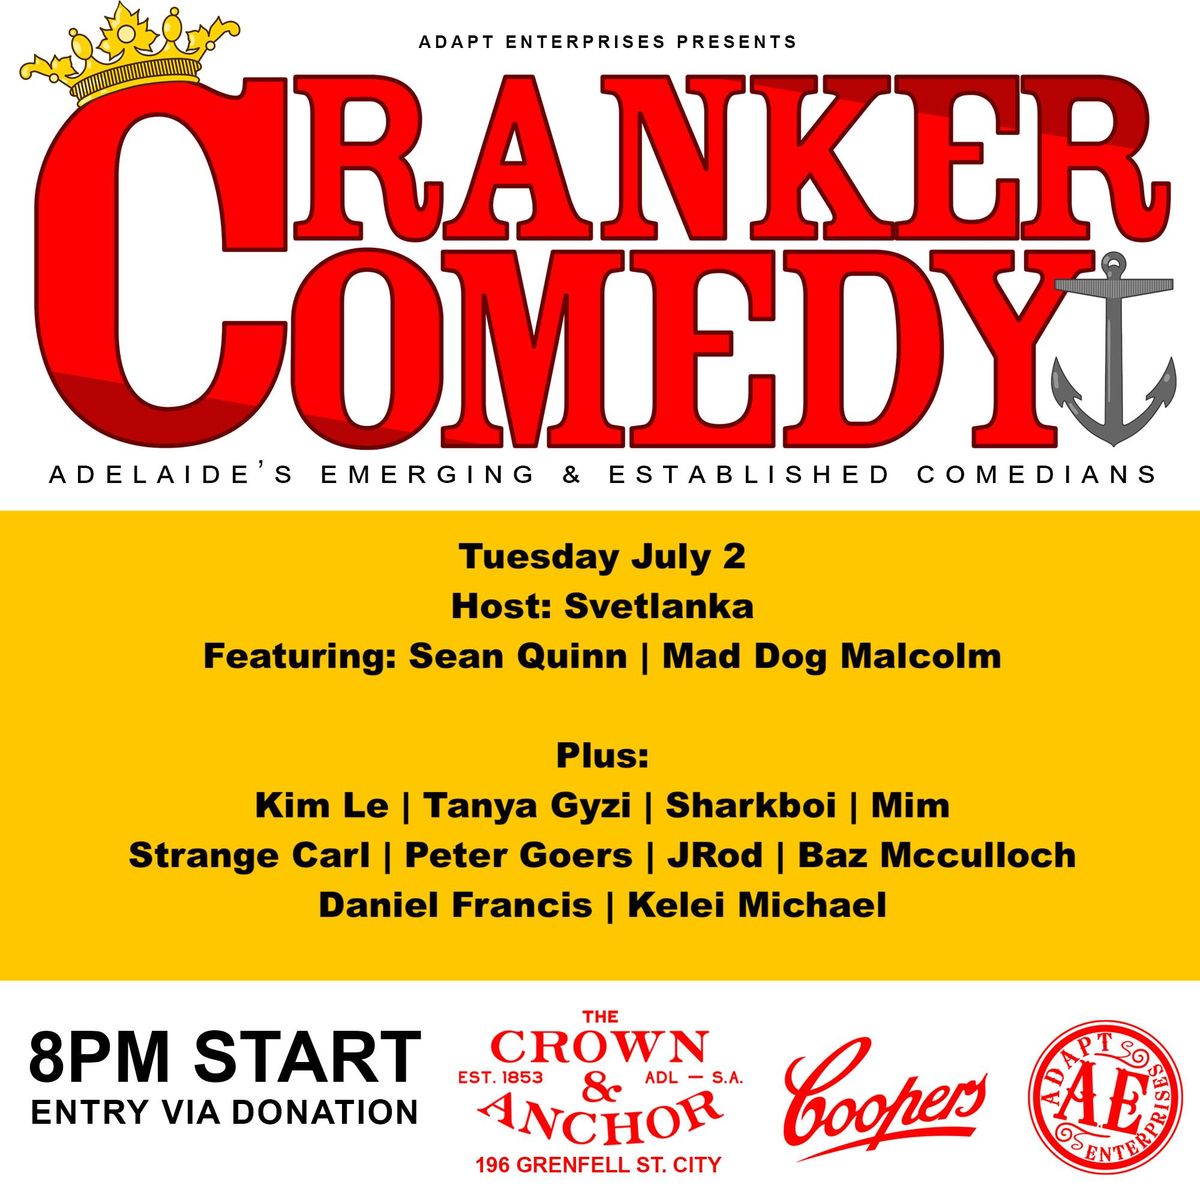 Cranker Comedy Tues July 2